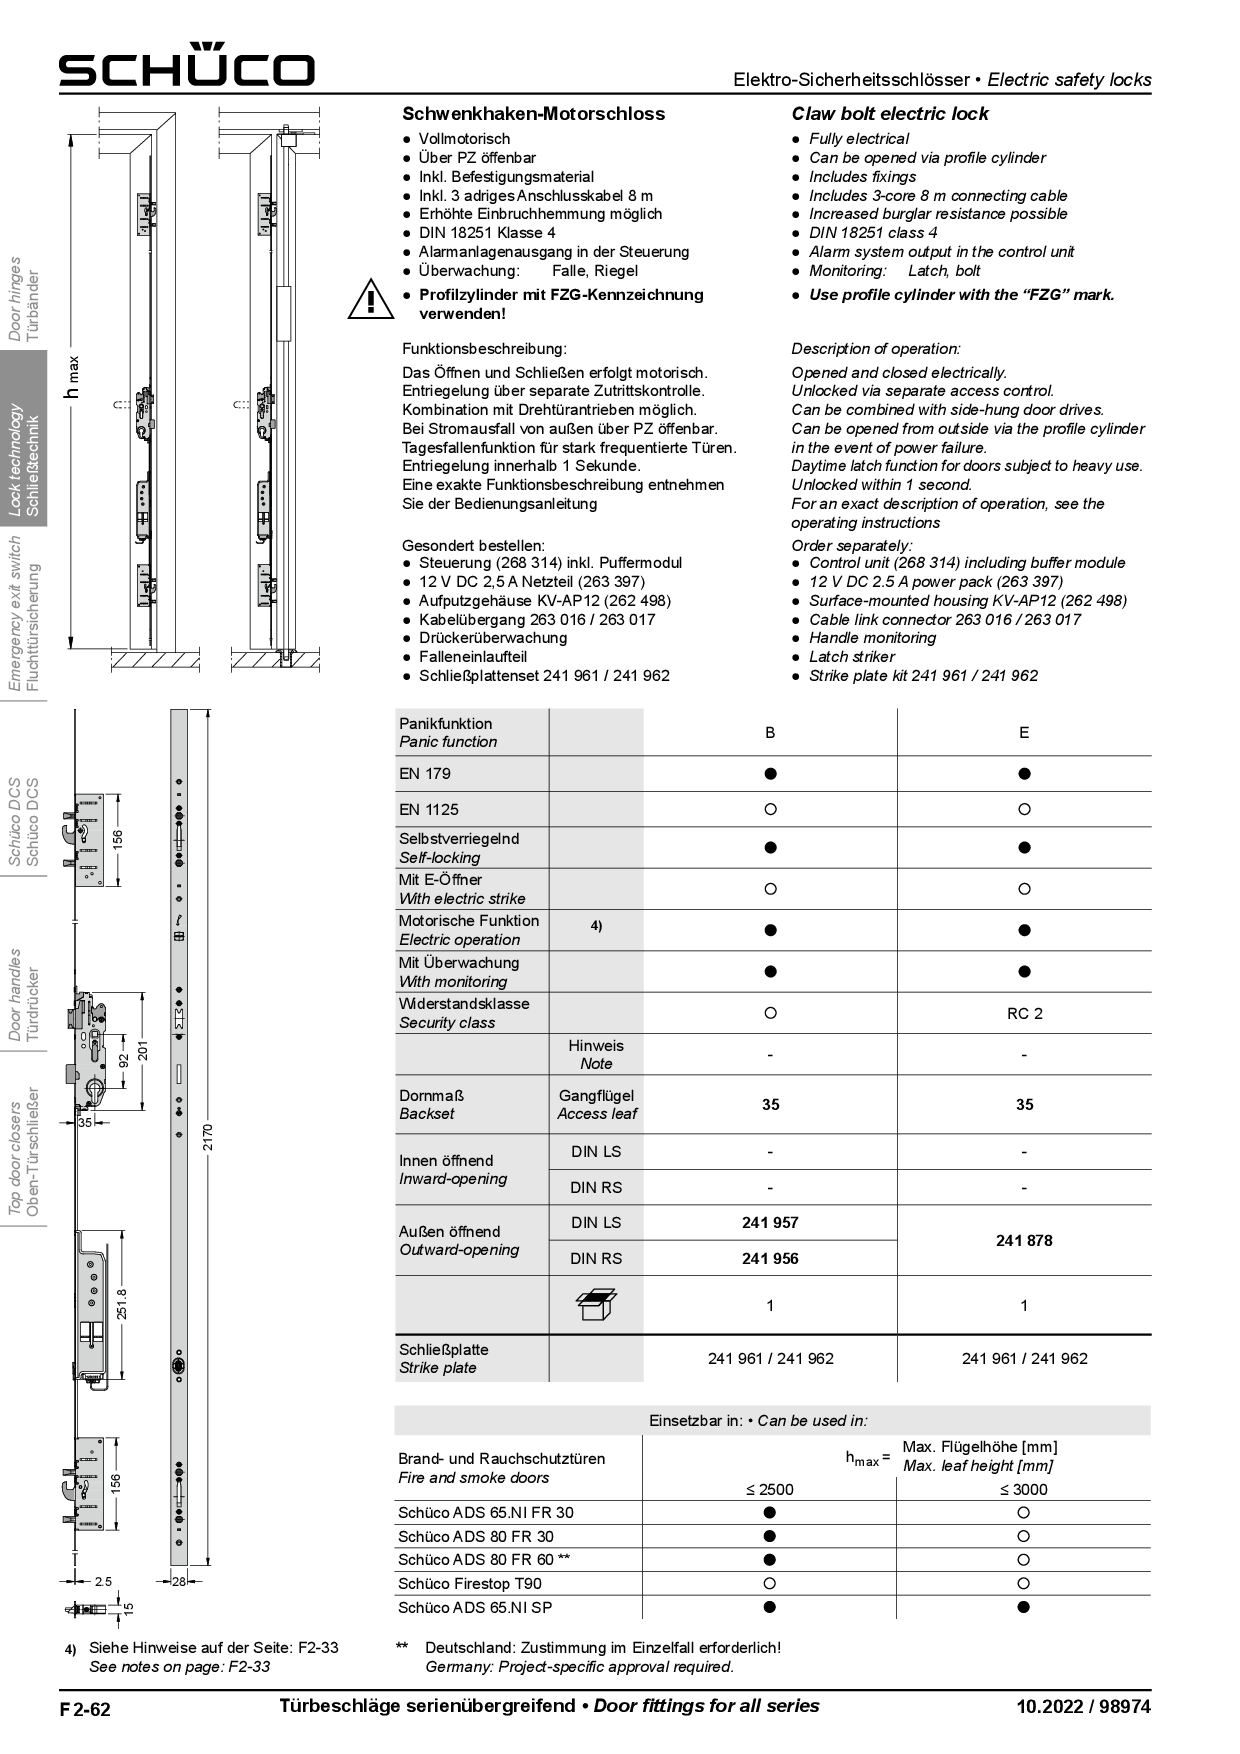 Schüco Schwenkhaken-Motorschloss mit Antipanikfunktion B, DIN links 241957